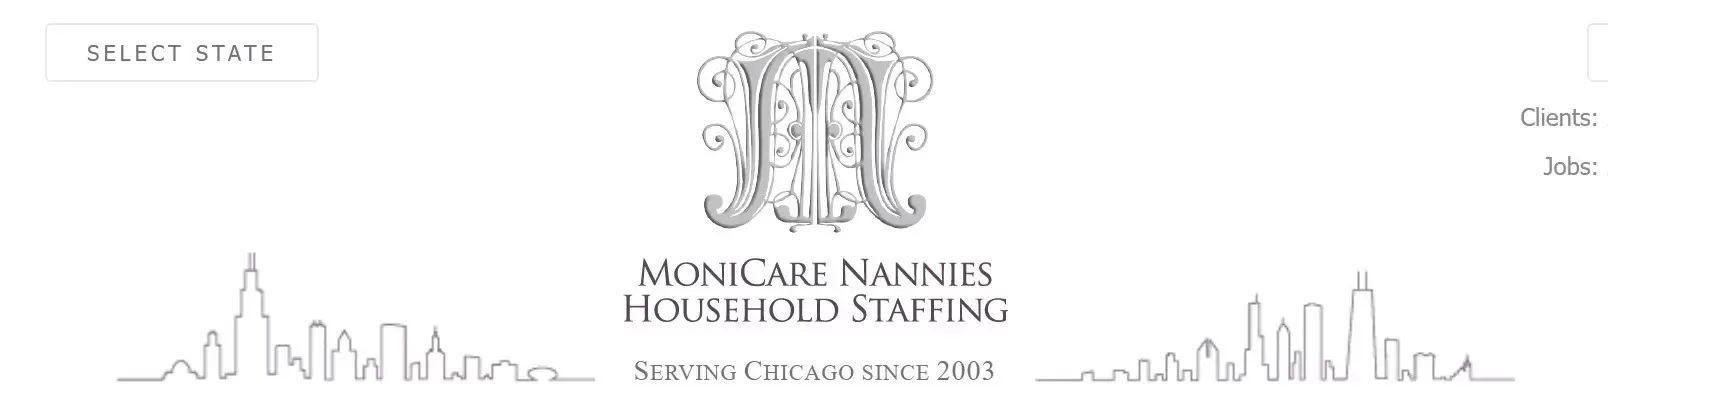 MoniCare Nannies Company Profile and Reviews